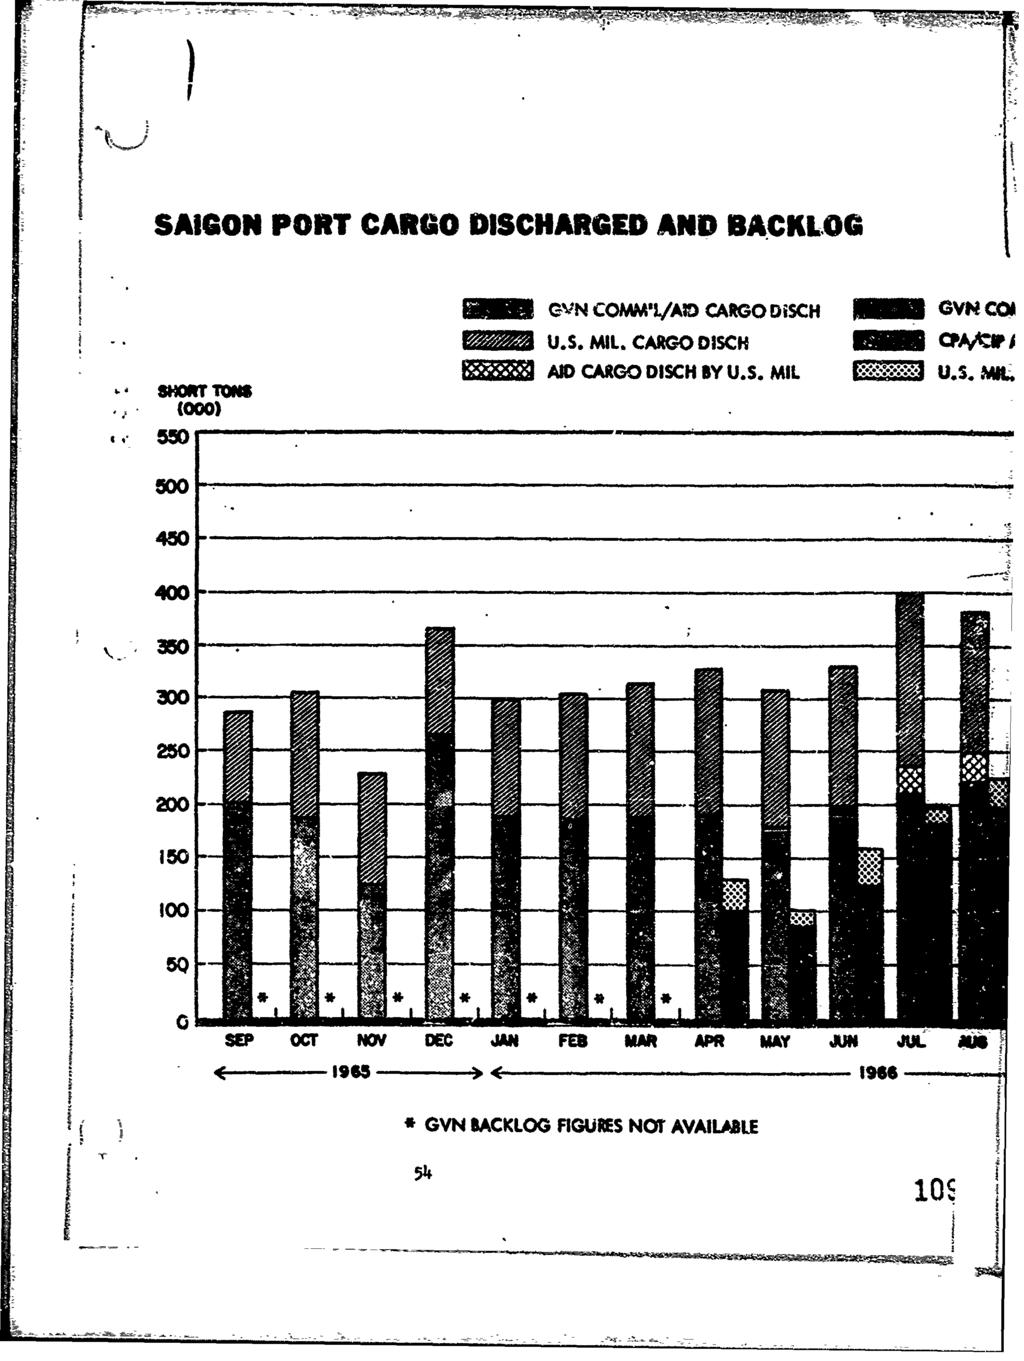 SAIGON PORT CARGO DISCHARGED AND BACKLOG SHMRTTNS (000). 55D GVN COMM'/AMD CARGO DiSCH GVW COi MEW U.S. MIL.